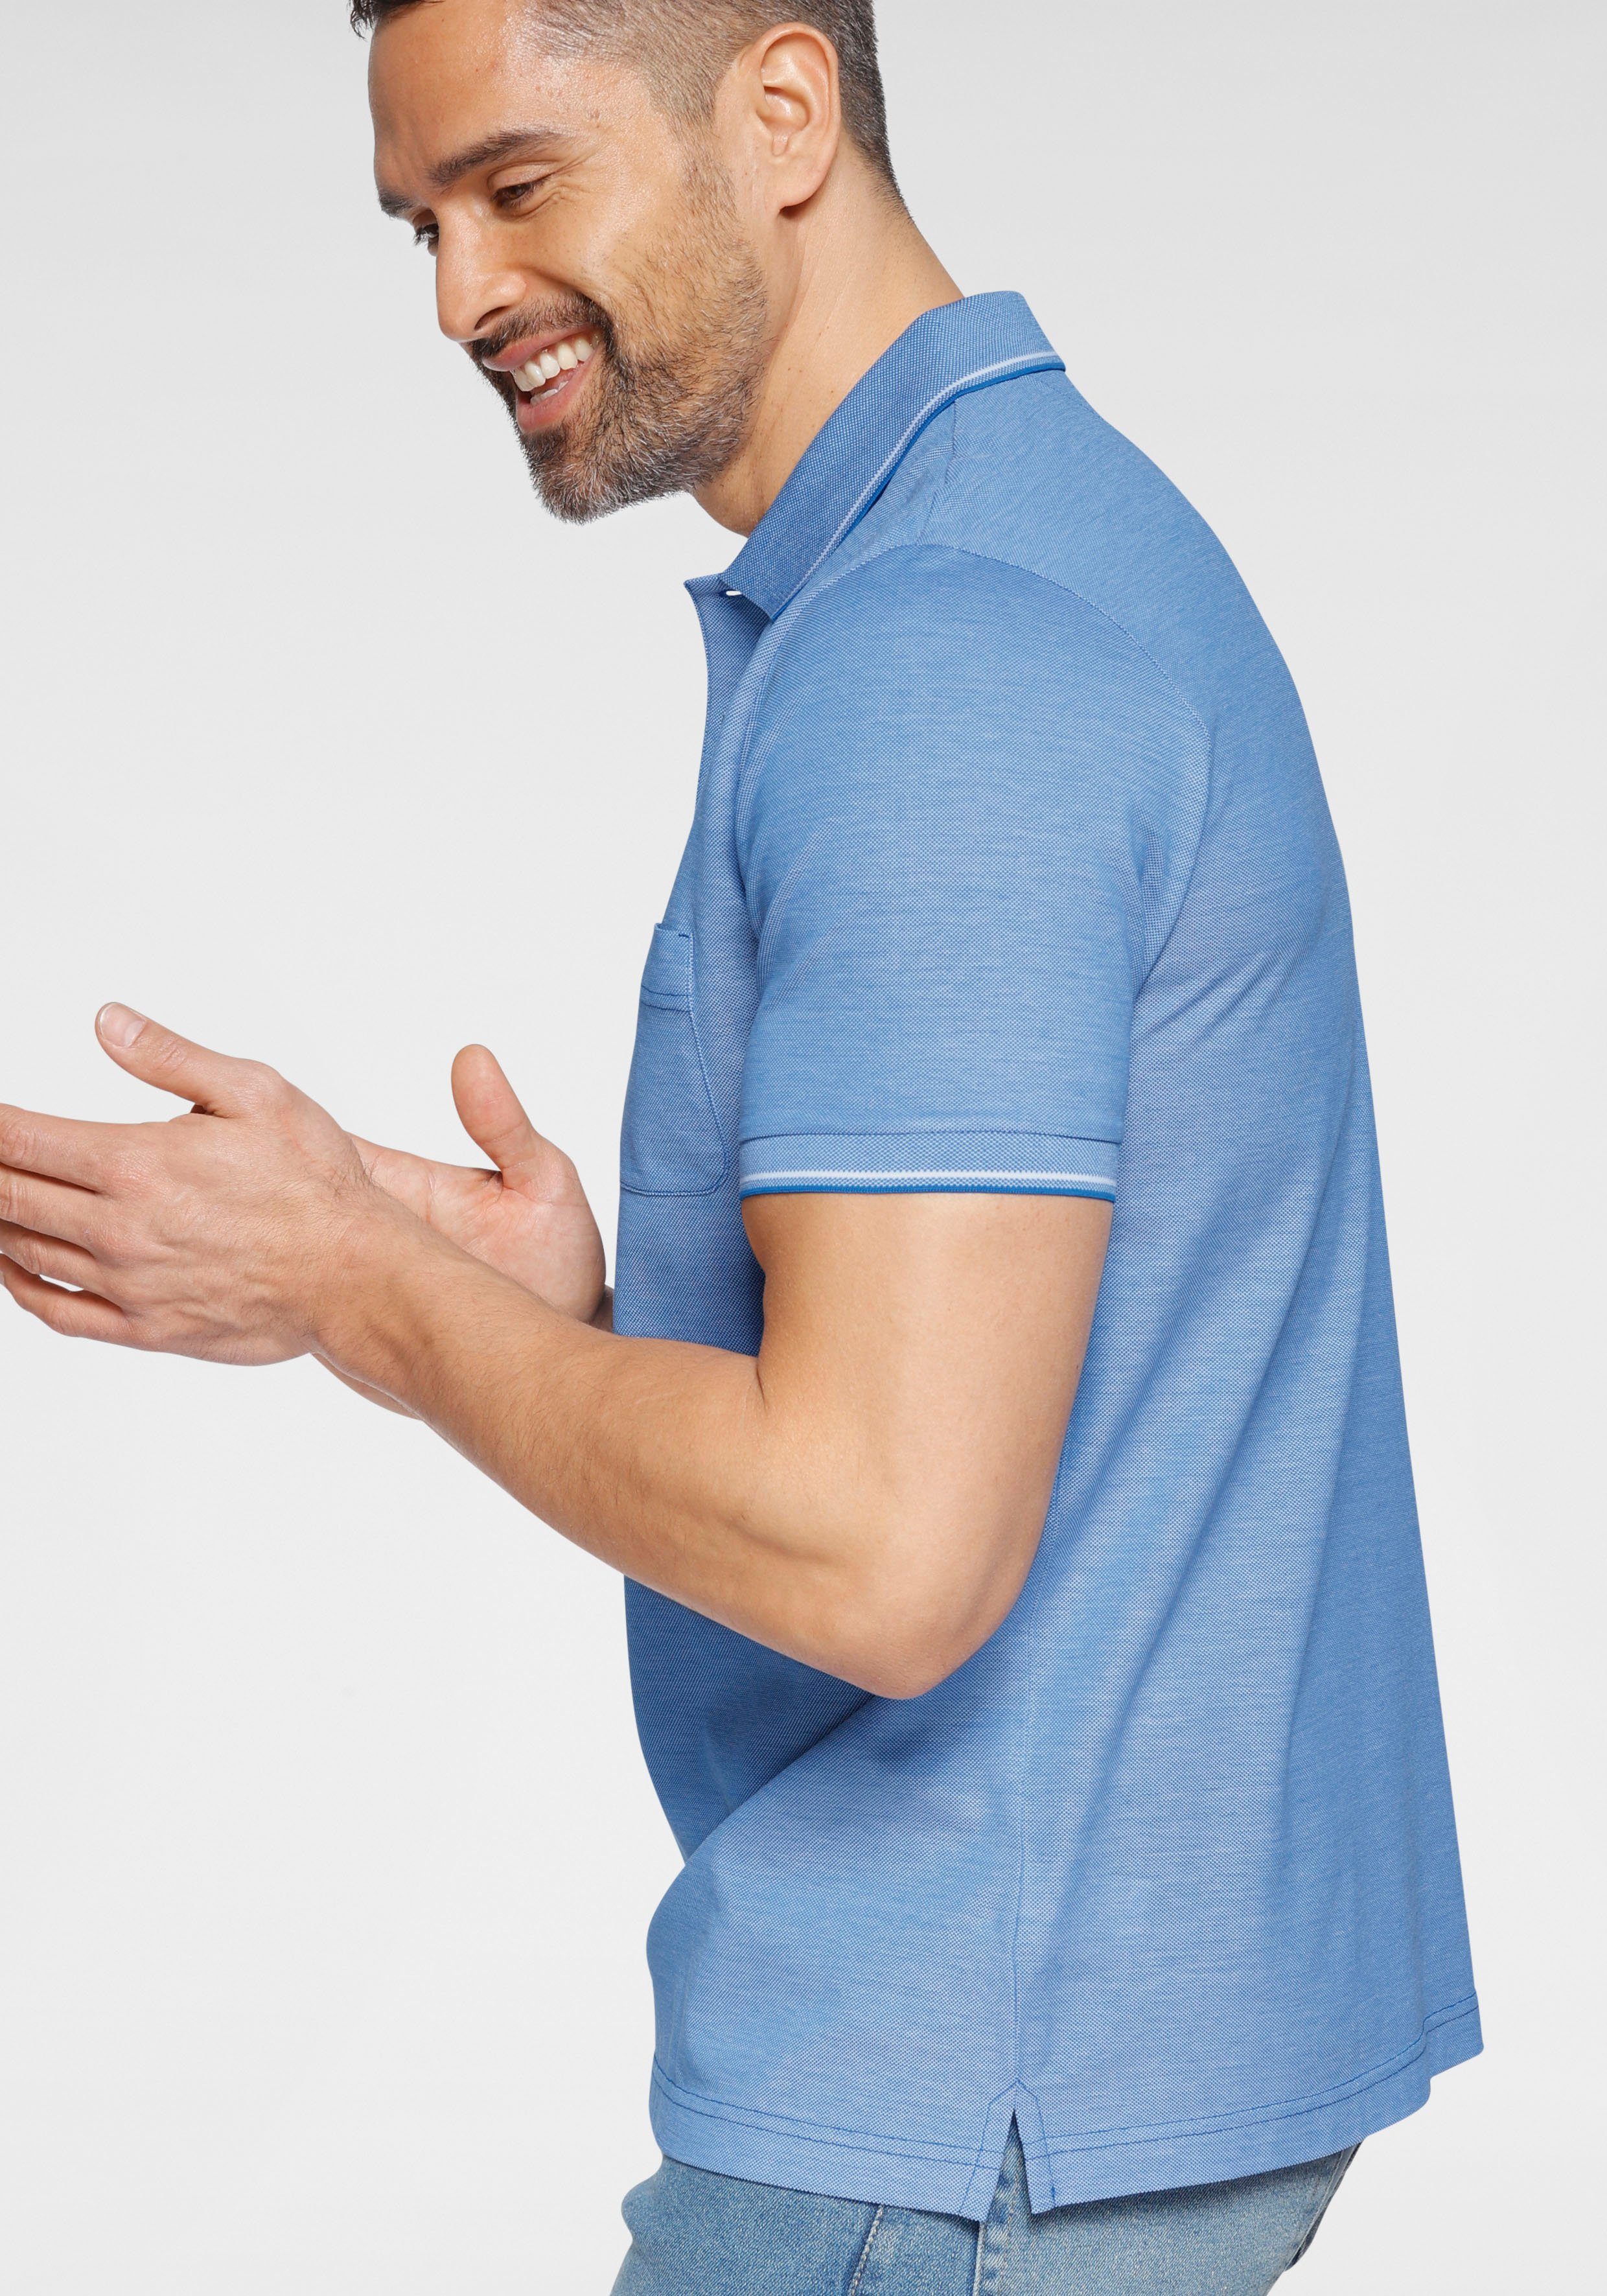 OLYMP Poloshirt in hochwertiger blau-meliert modern fit Piqué-Qualität Luxor